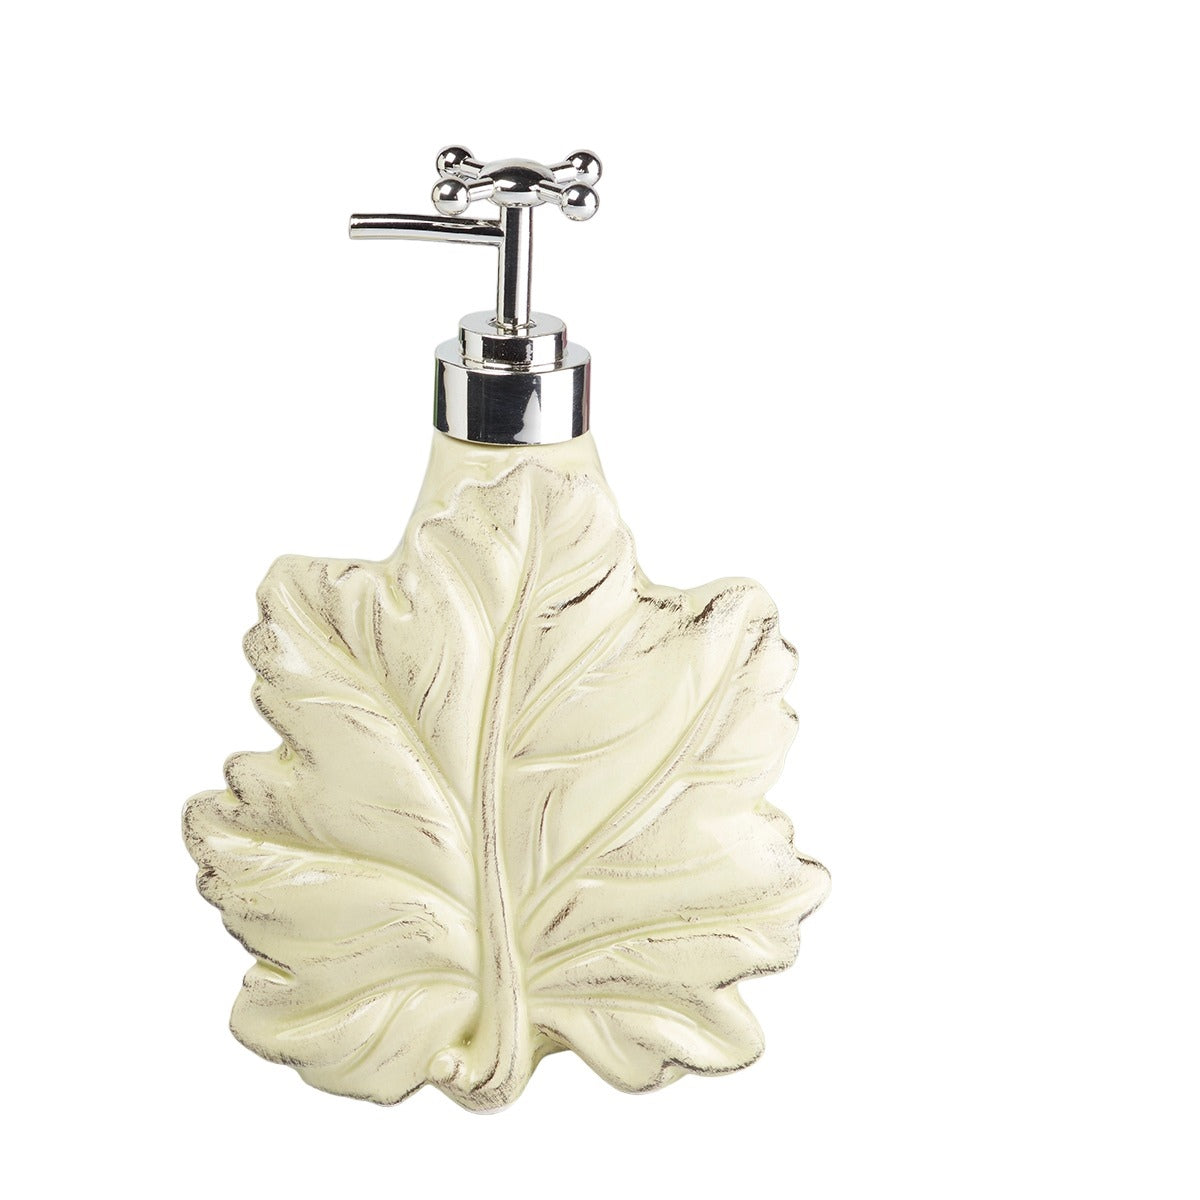 Ceramic Soap Dispenser handwash Pump for Bathroom, Set of 1, Pista (8637)